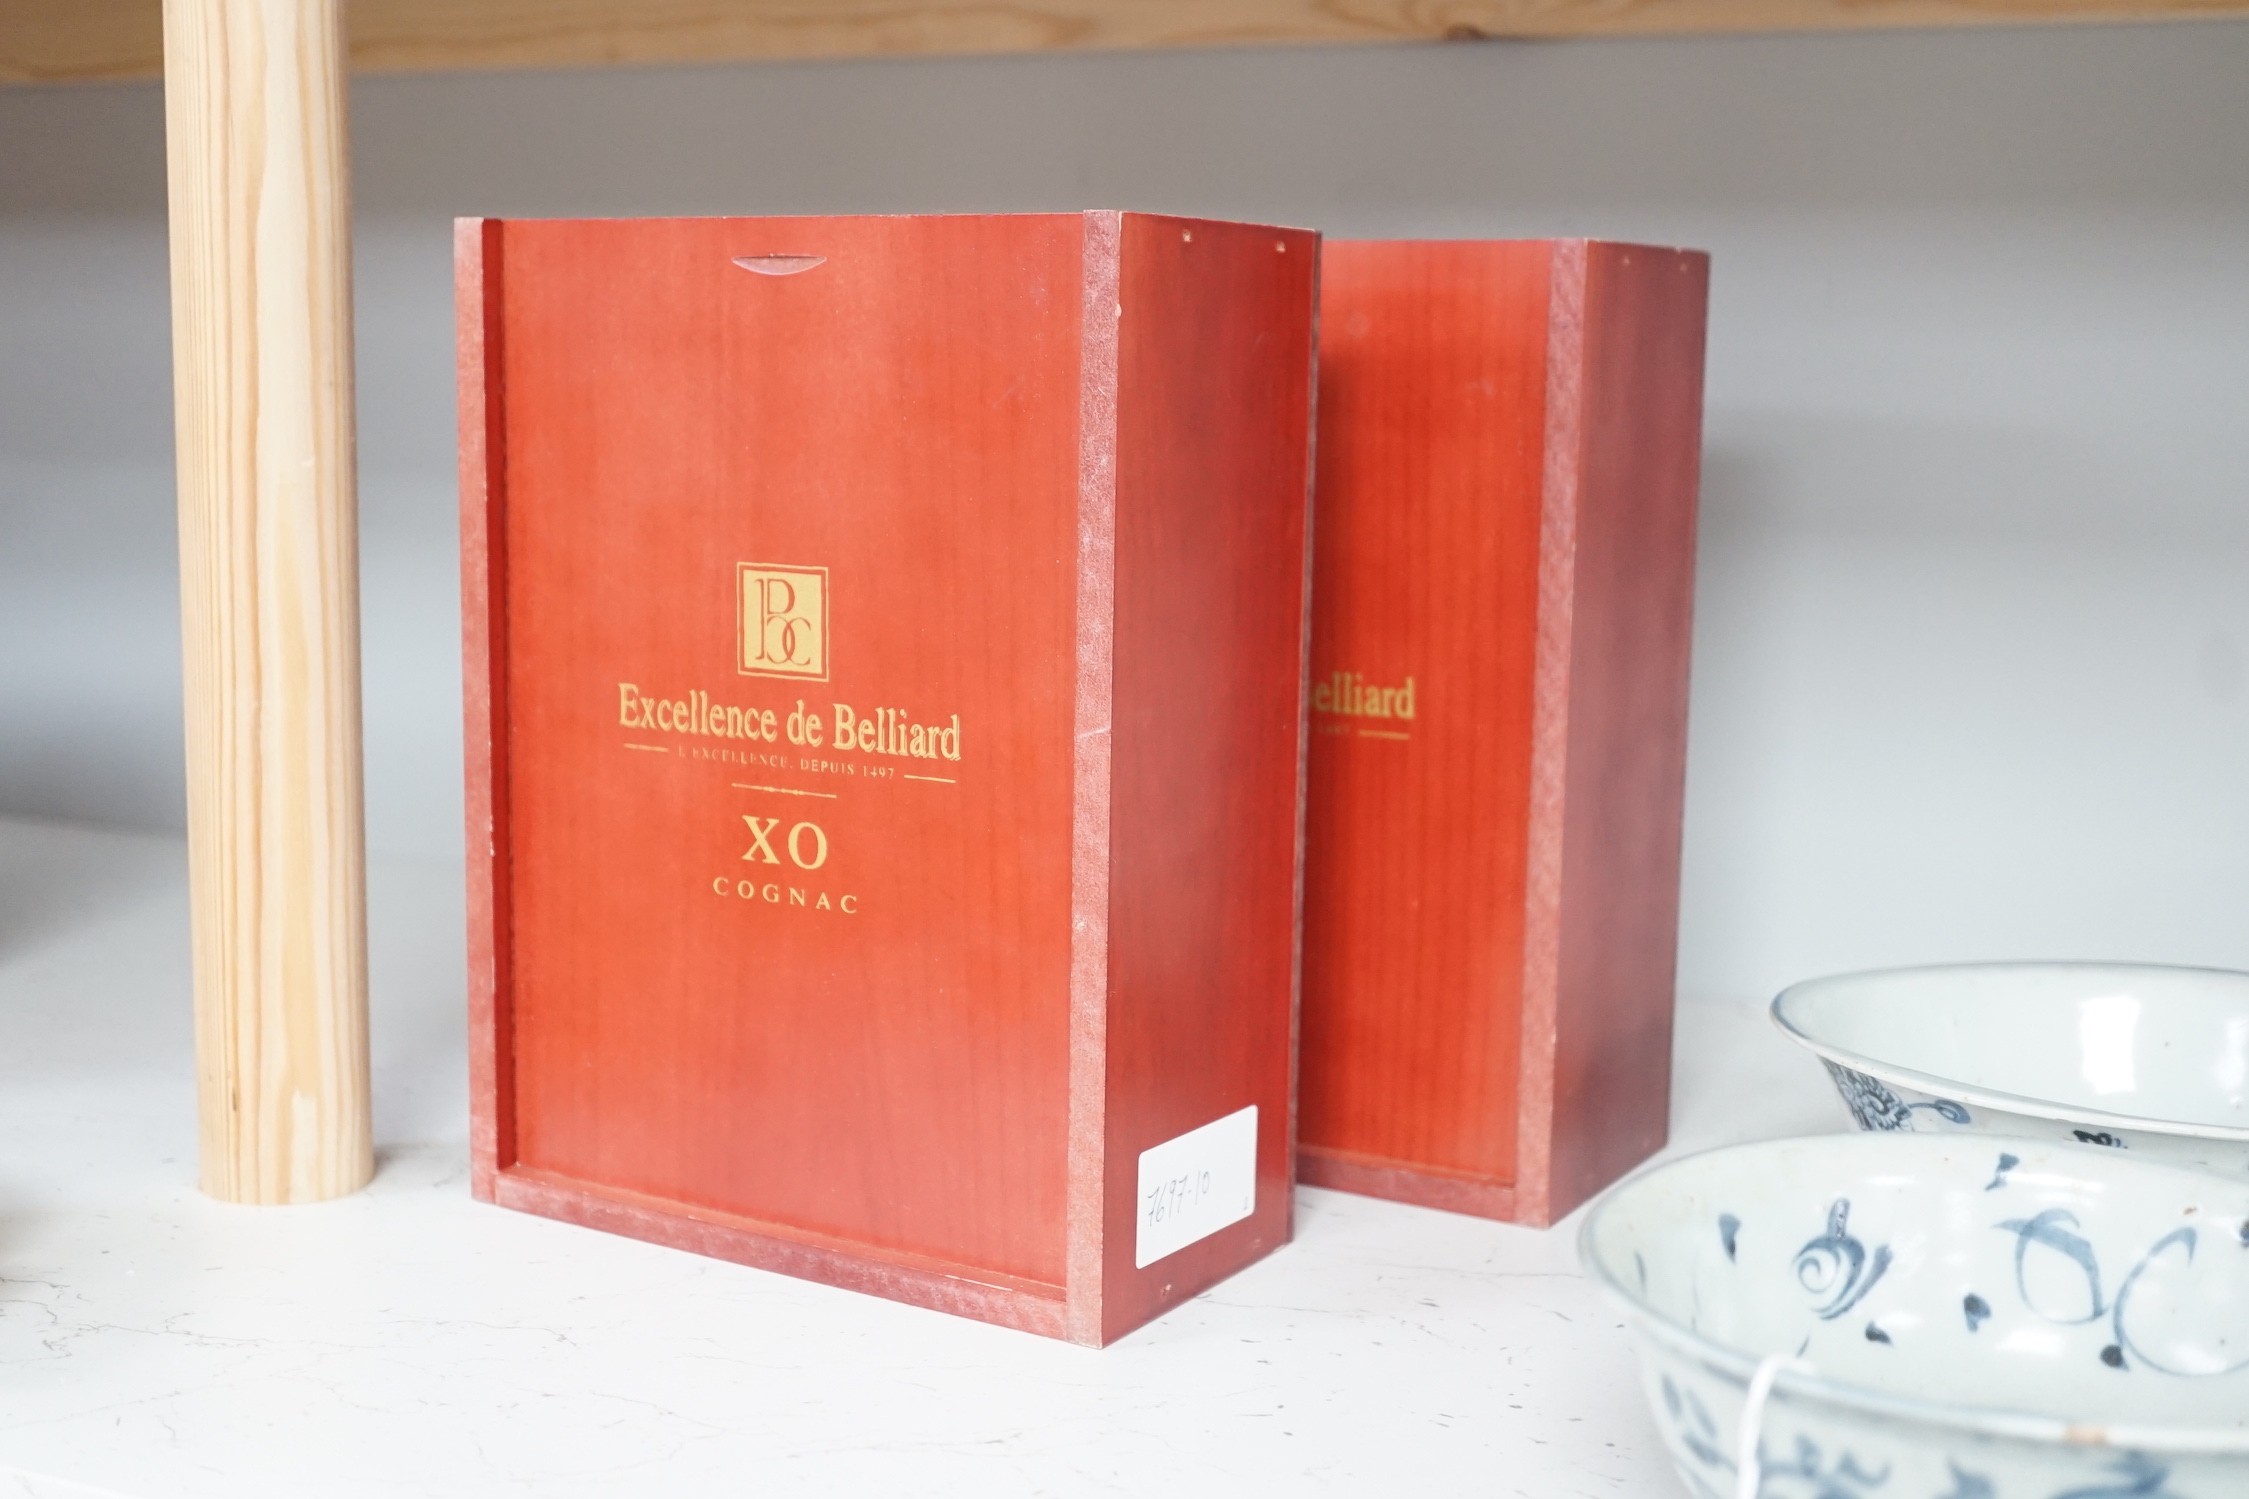 Two bottles of L'Excellence De Belliard Cognac XO each in wooden case (decanter bottle)